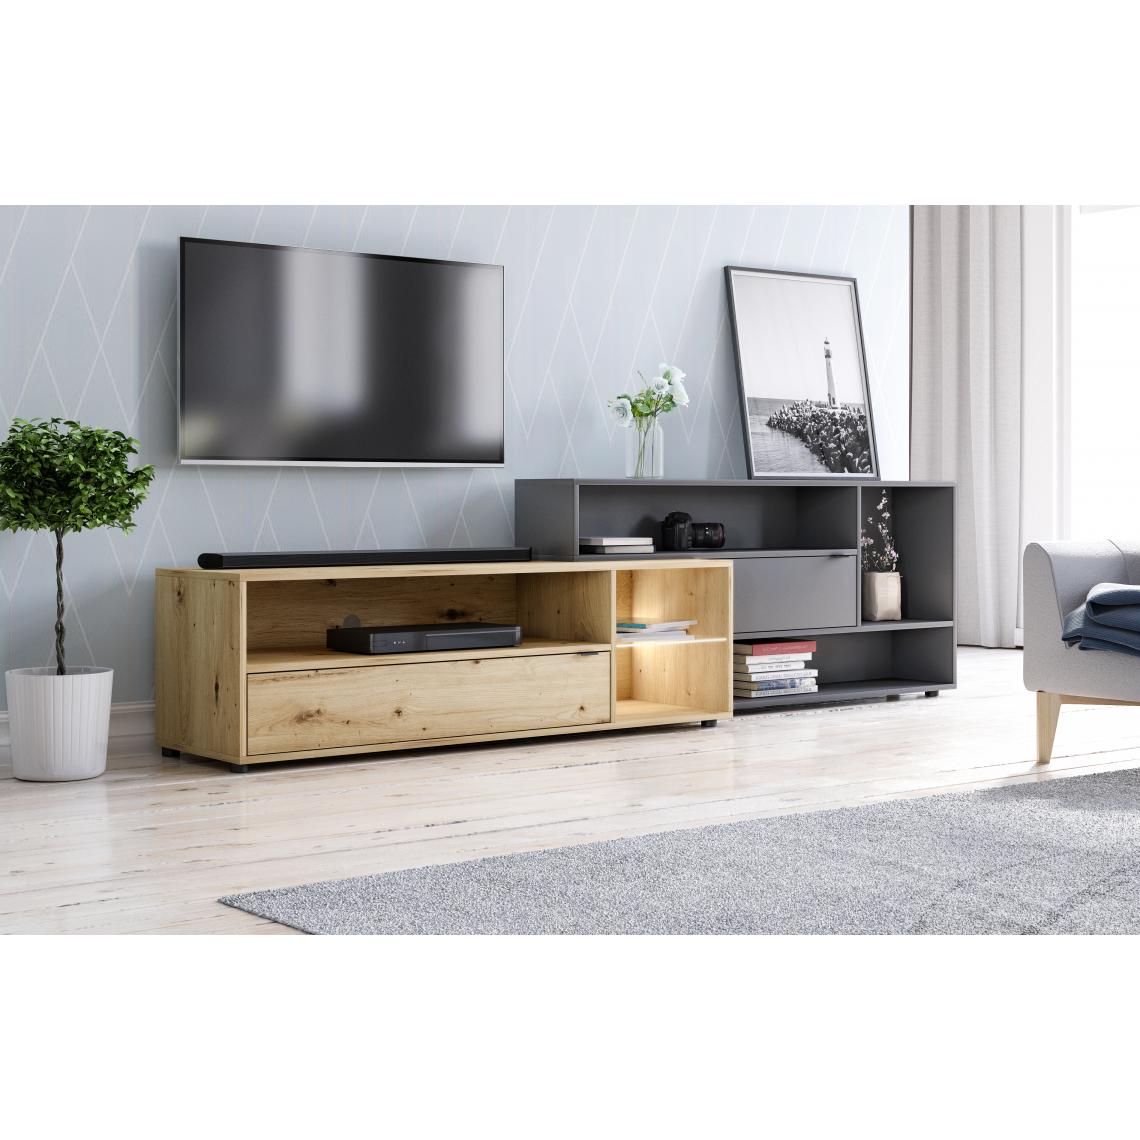 Vivaldi - VALDI Extension du meuble TV - LET"S ROCK - 242 cm - chêne artisan / gris anthracite - Meubles TV, Hi-Fi